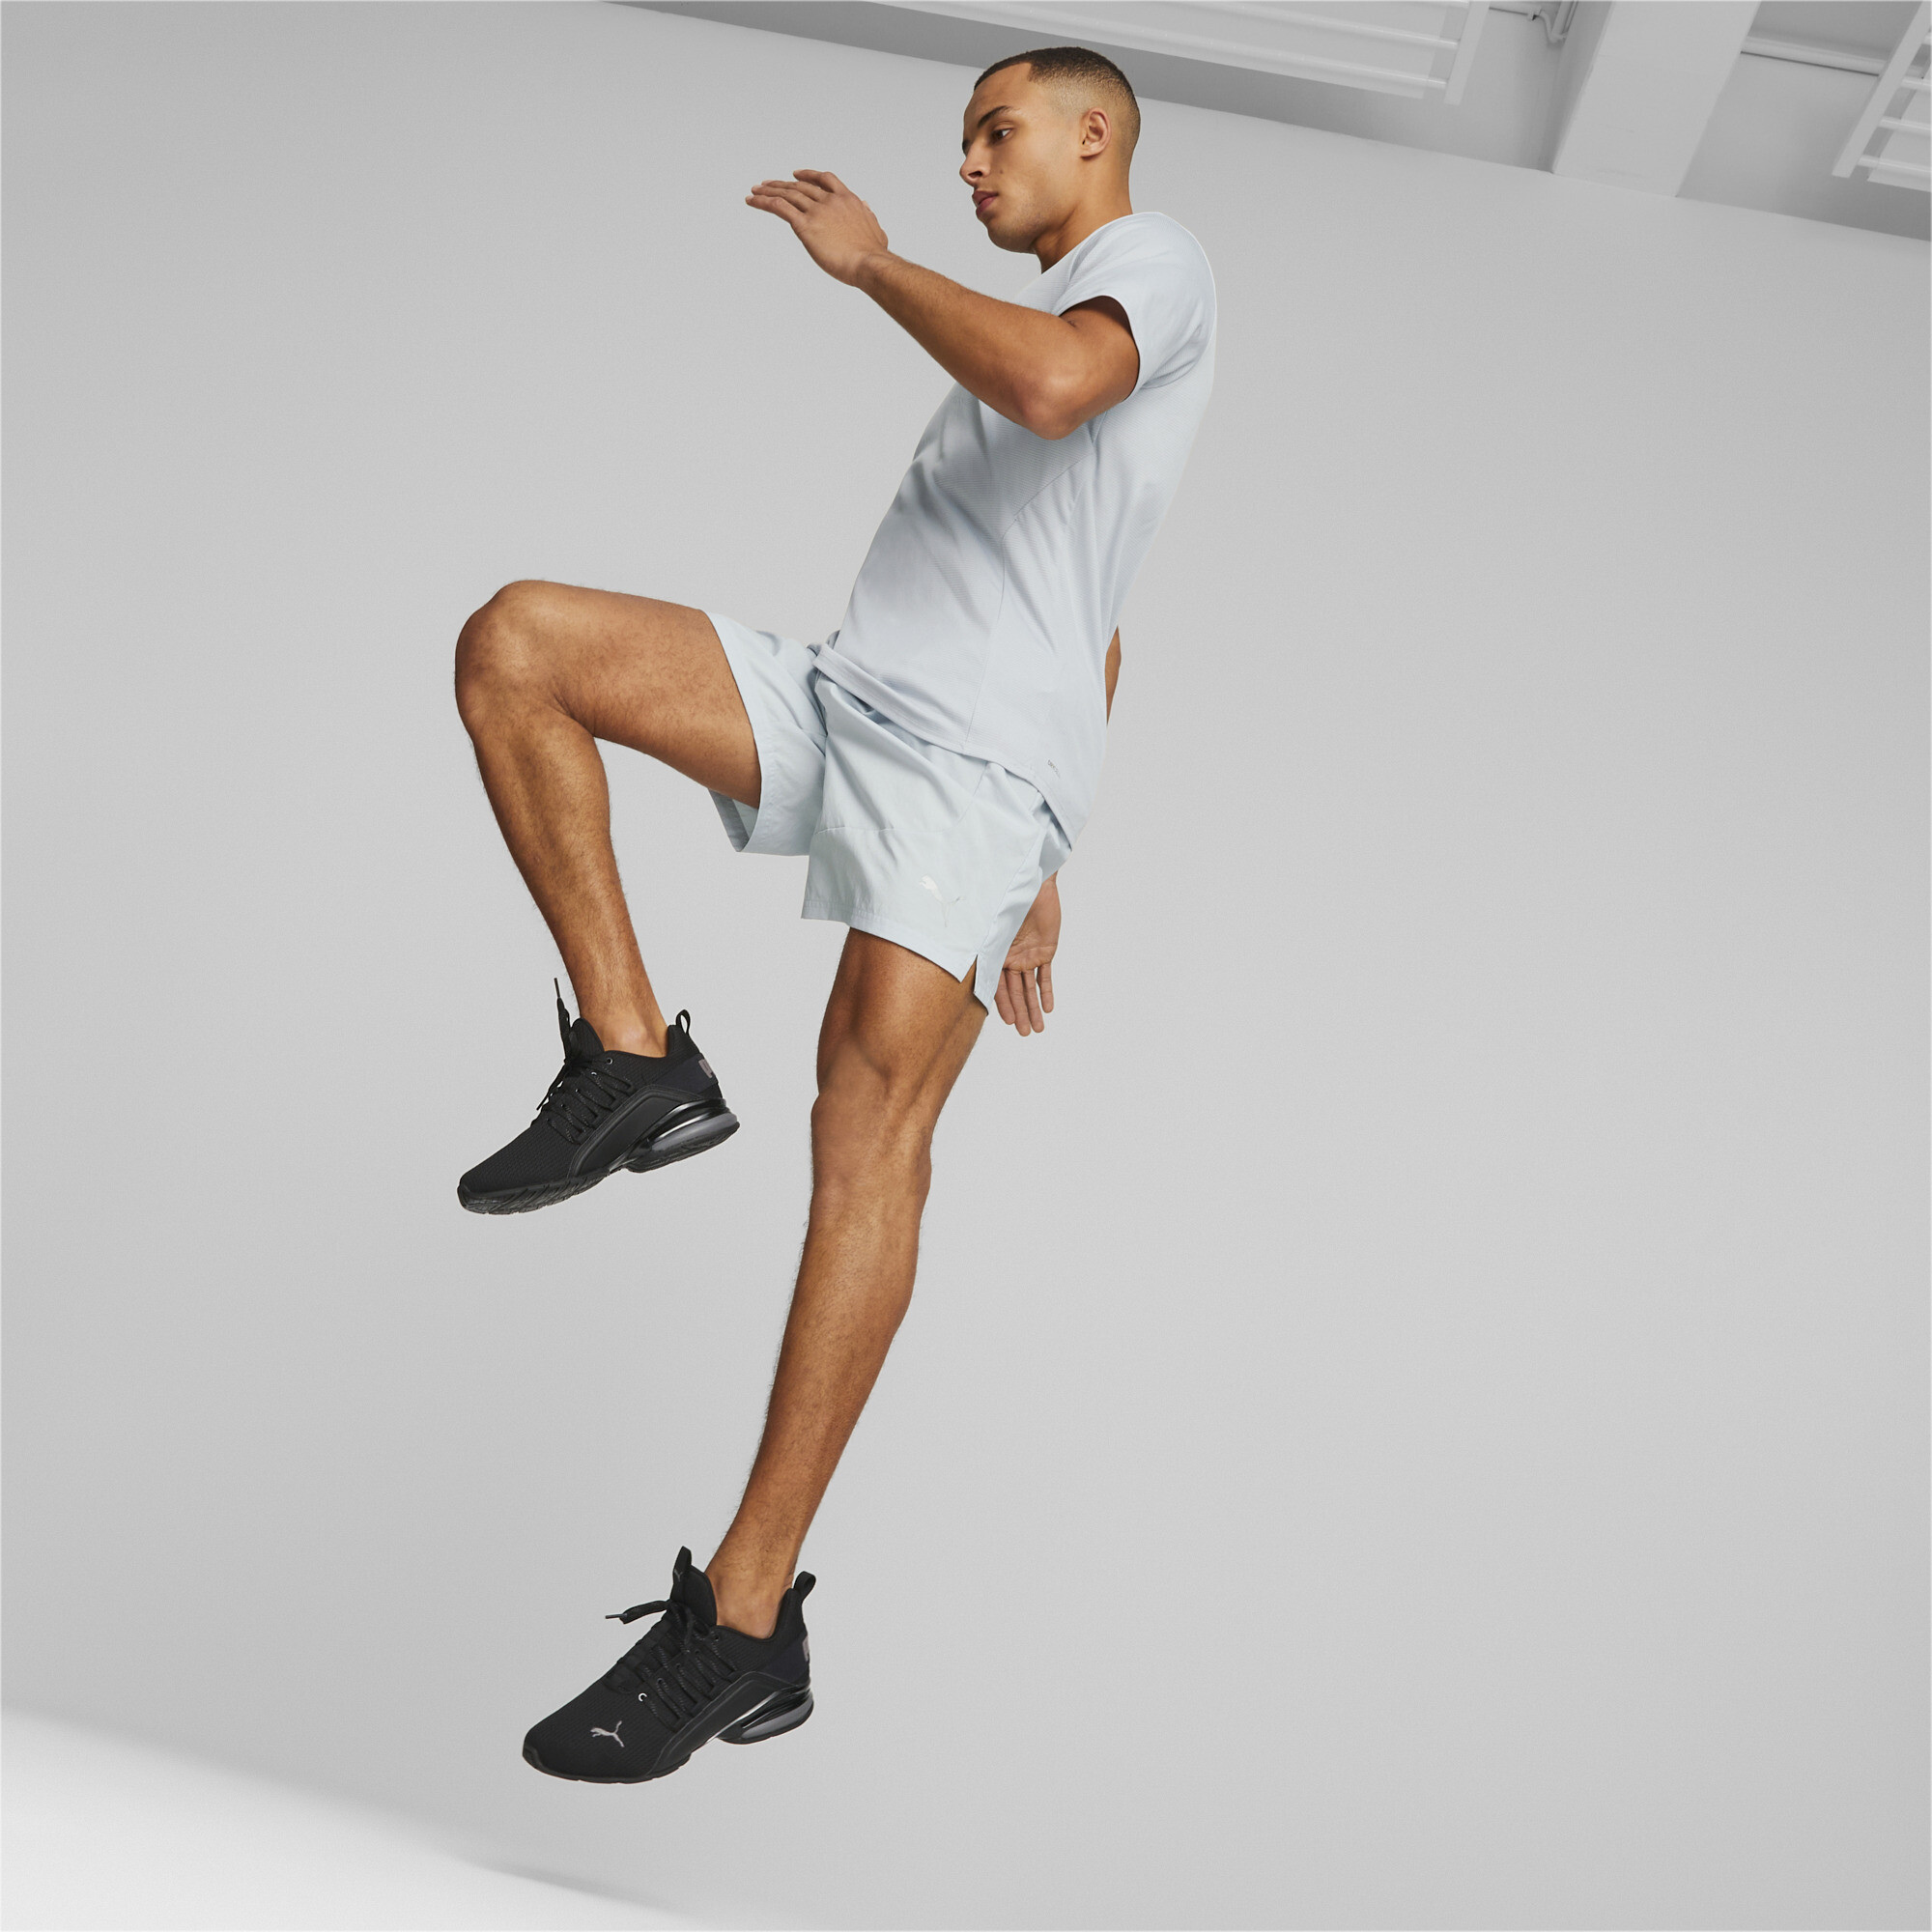 Men's Puma Axelion Refresh Running Shoes, Black, Size 40, Shoes